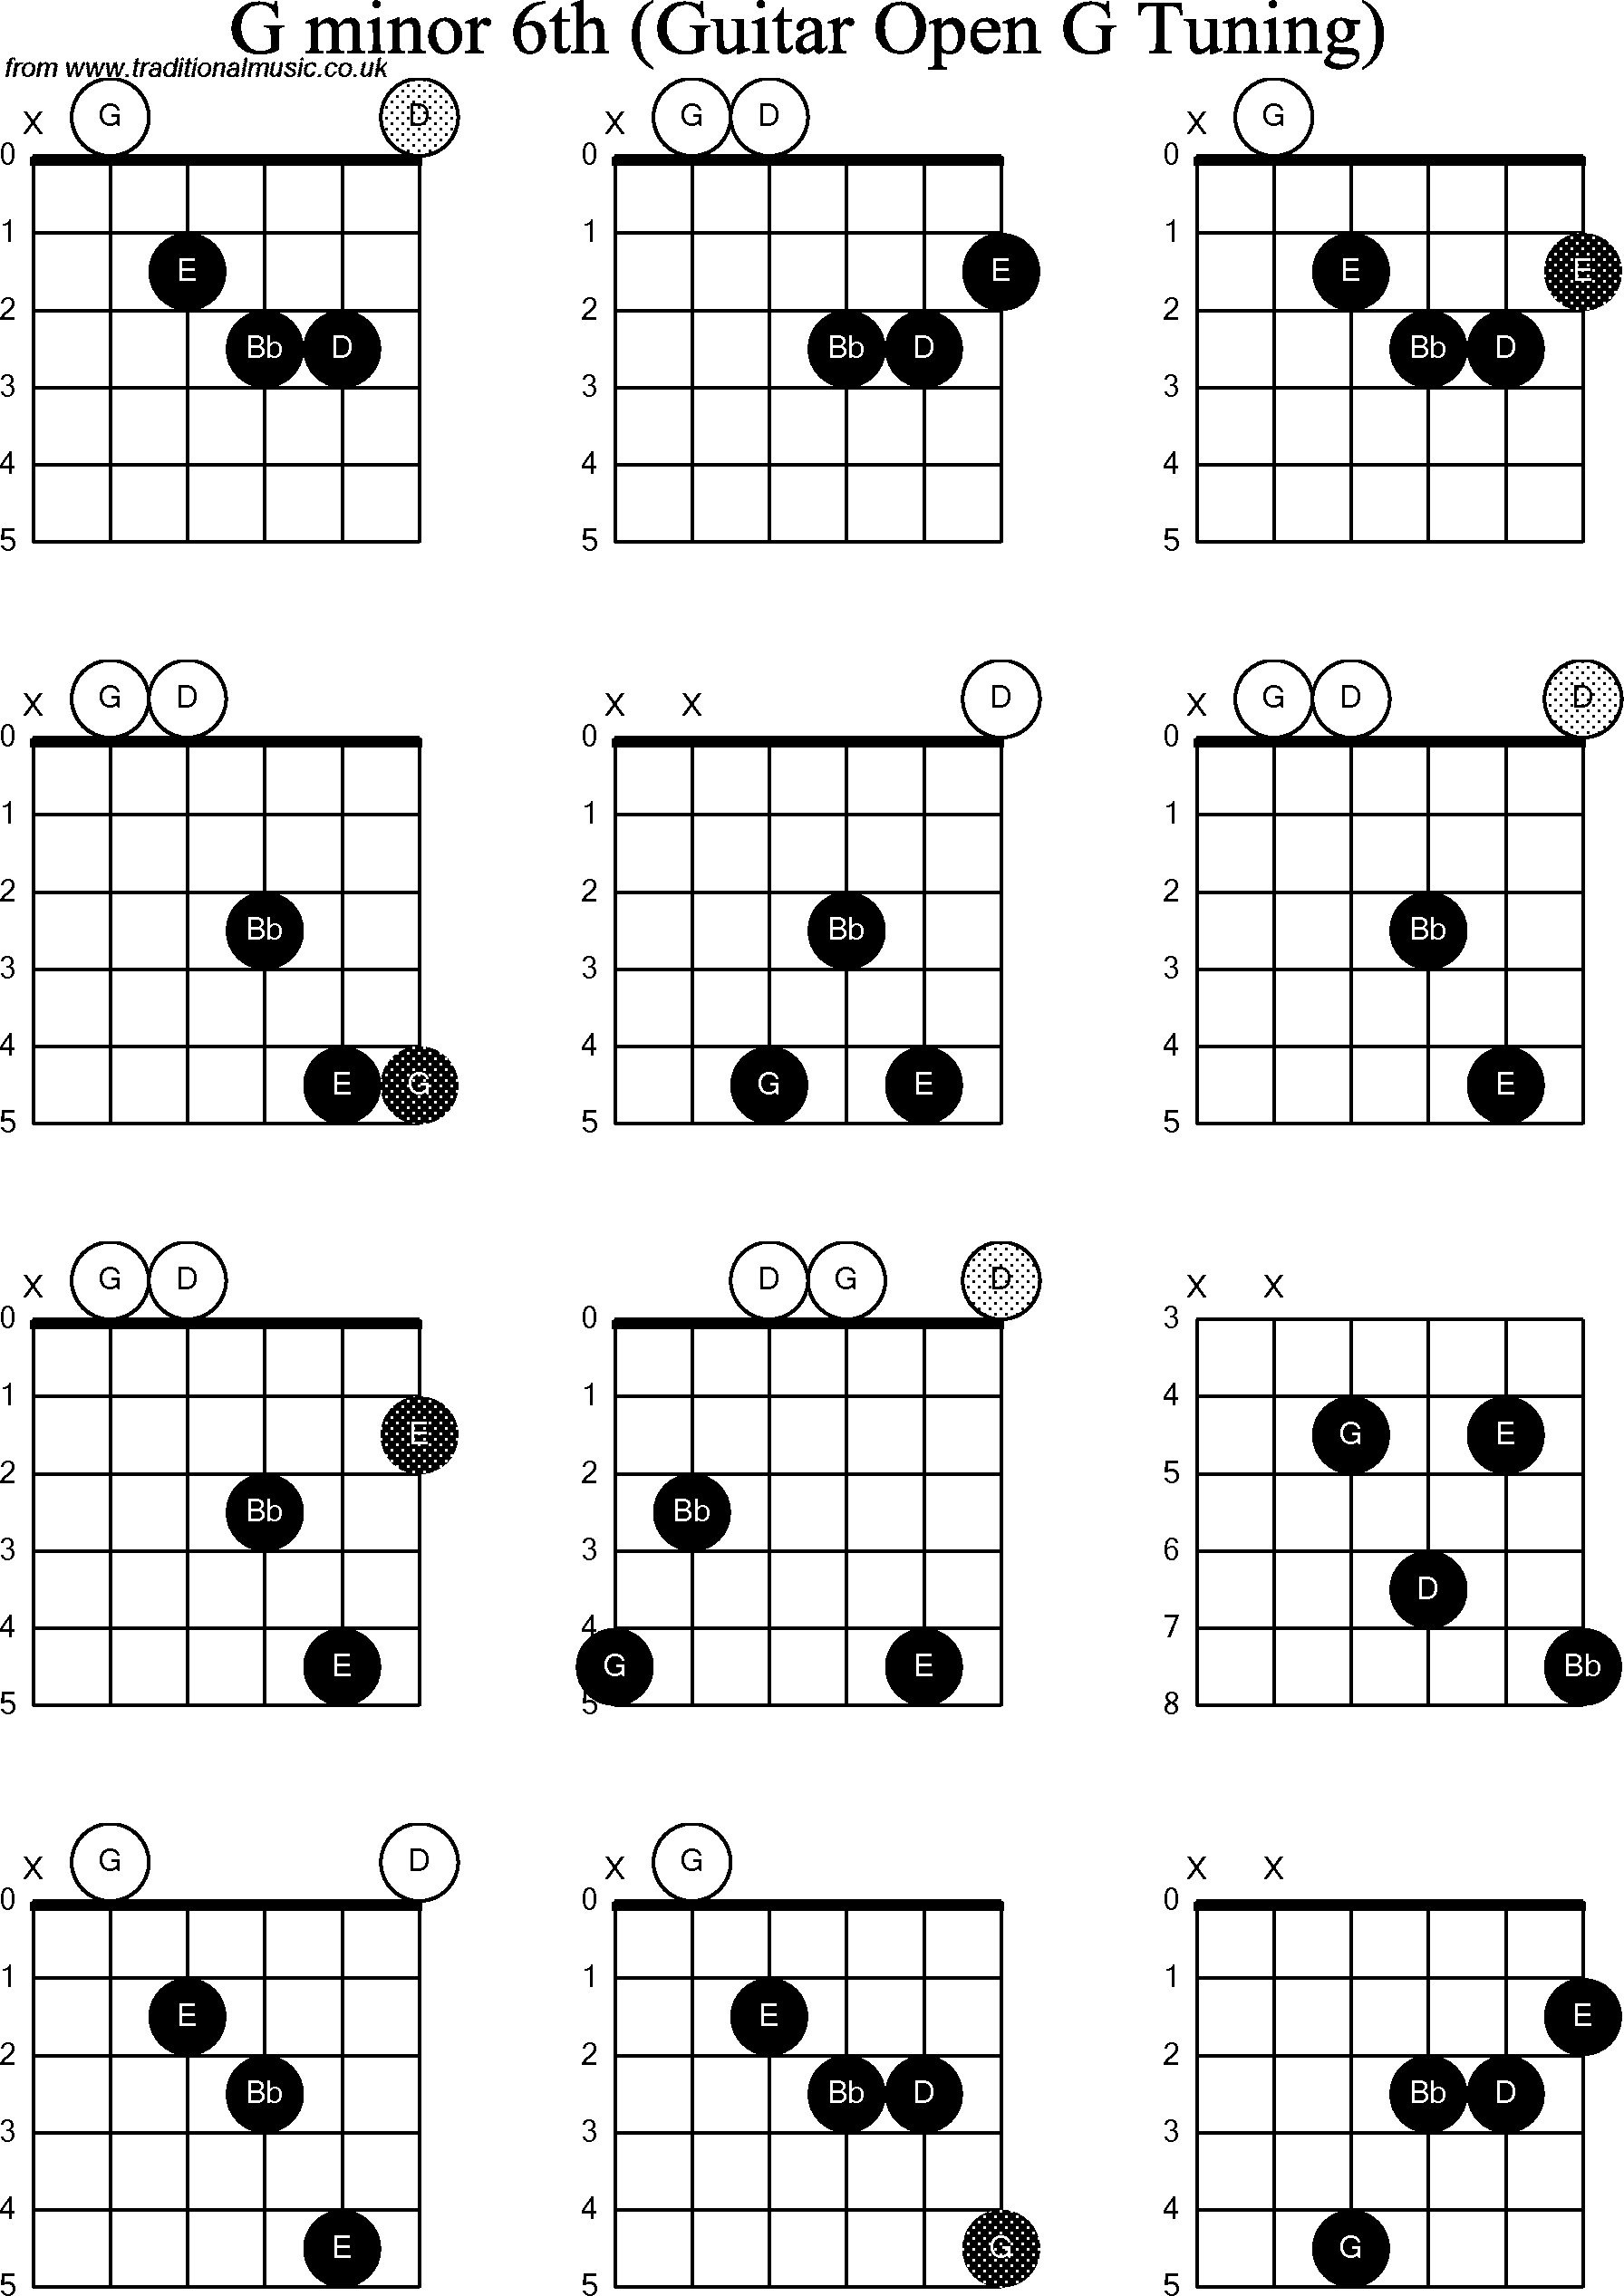 Chord diagrams for Dobro G Minor6th